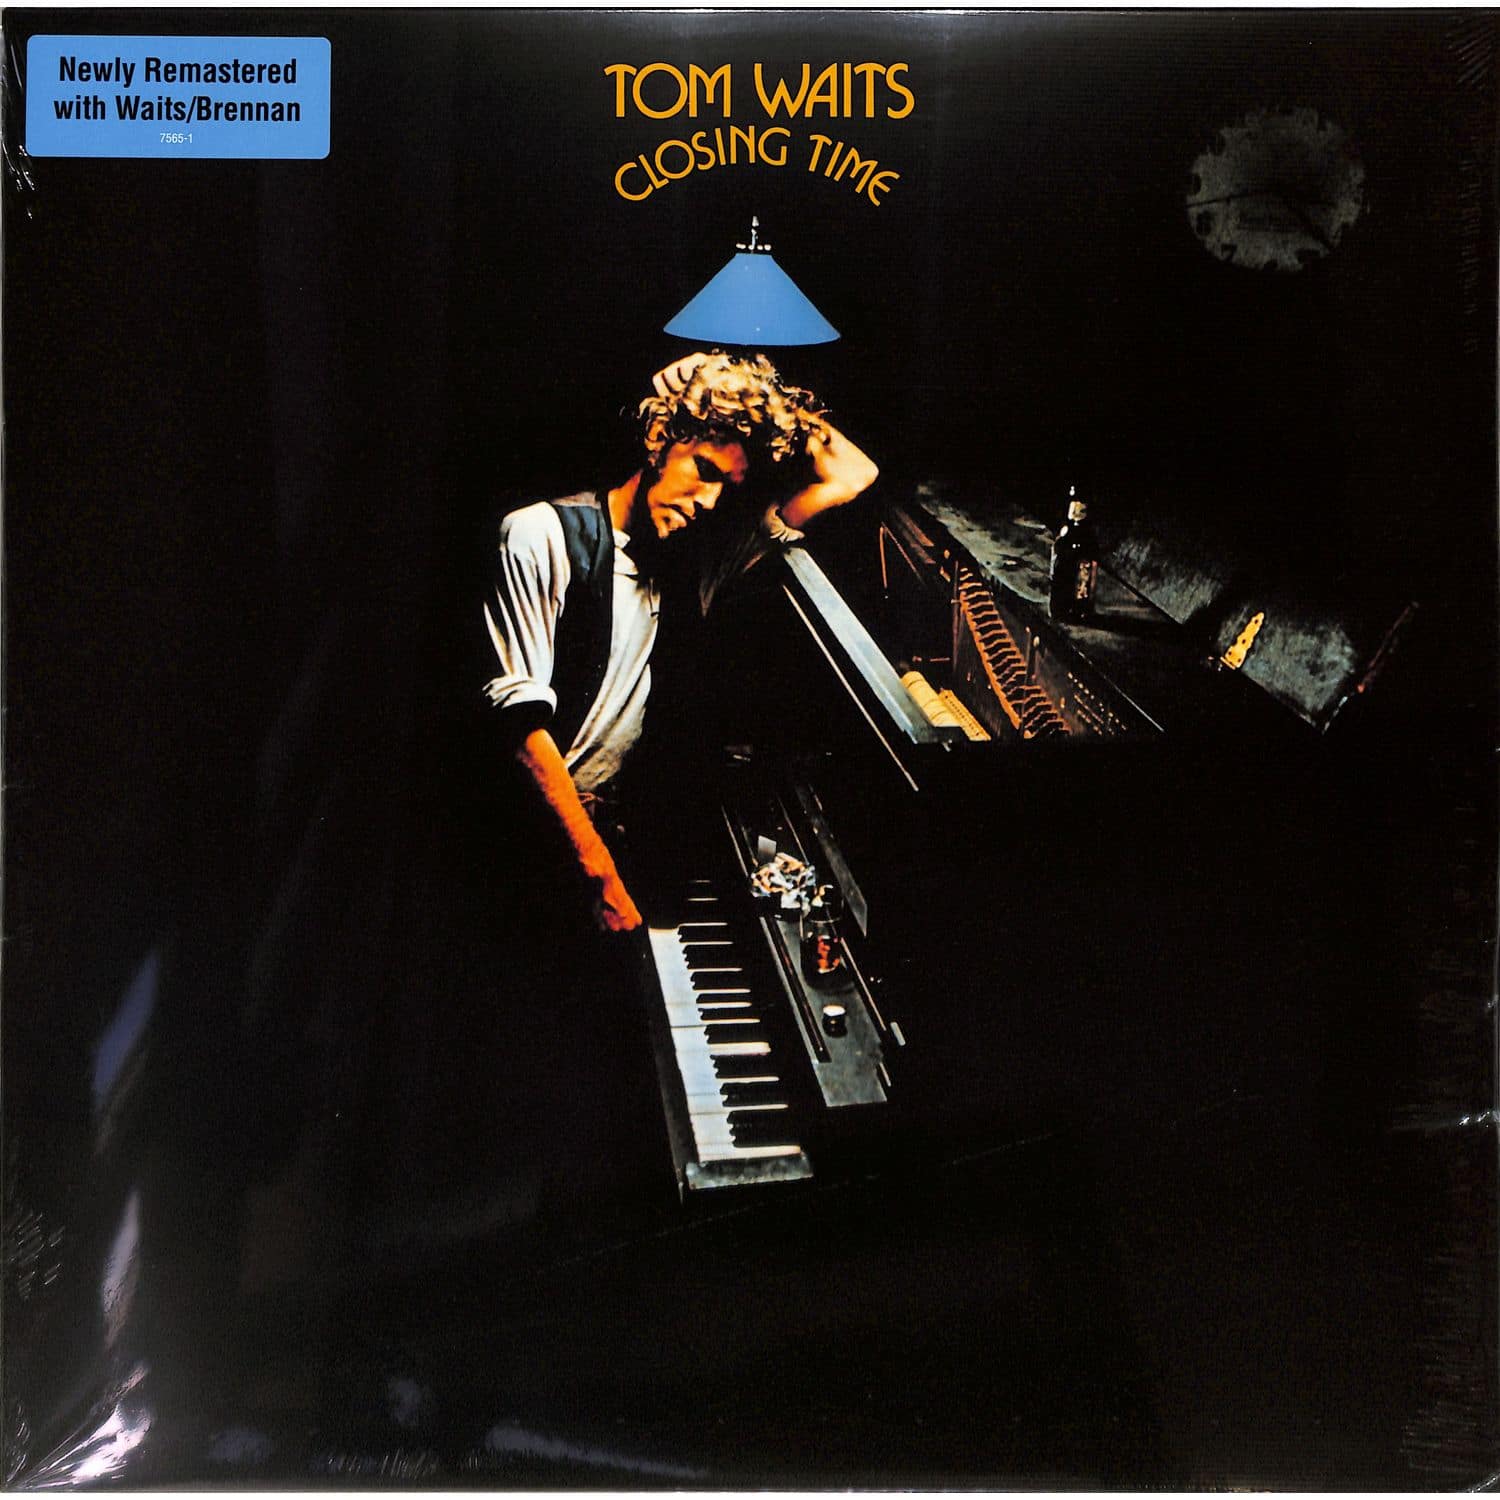 Tom Waits - CLOSING TIME 